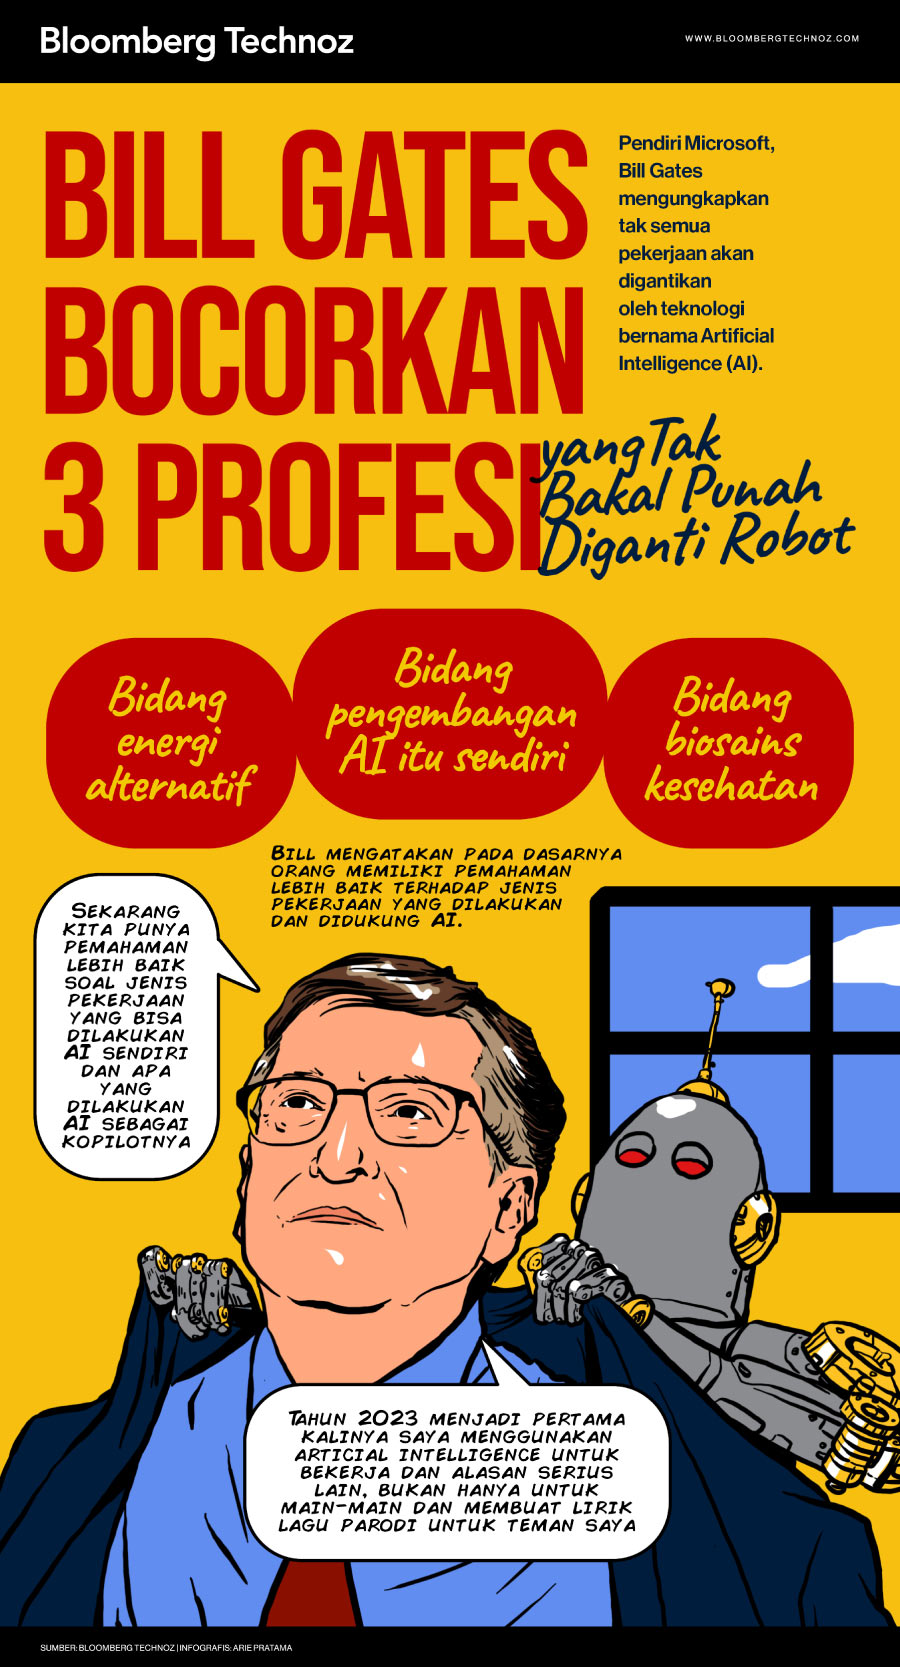 Bill Gates Bocorkan 3 Profesi yang Tak Bakal Punah Diganti Robot (Bloomberg Technoz/Arie Pratama)